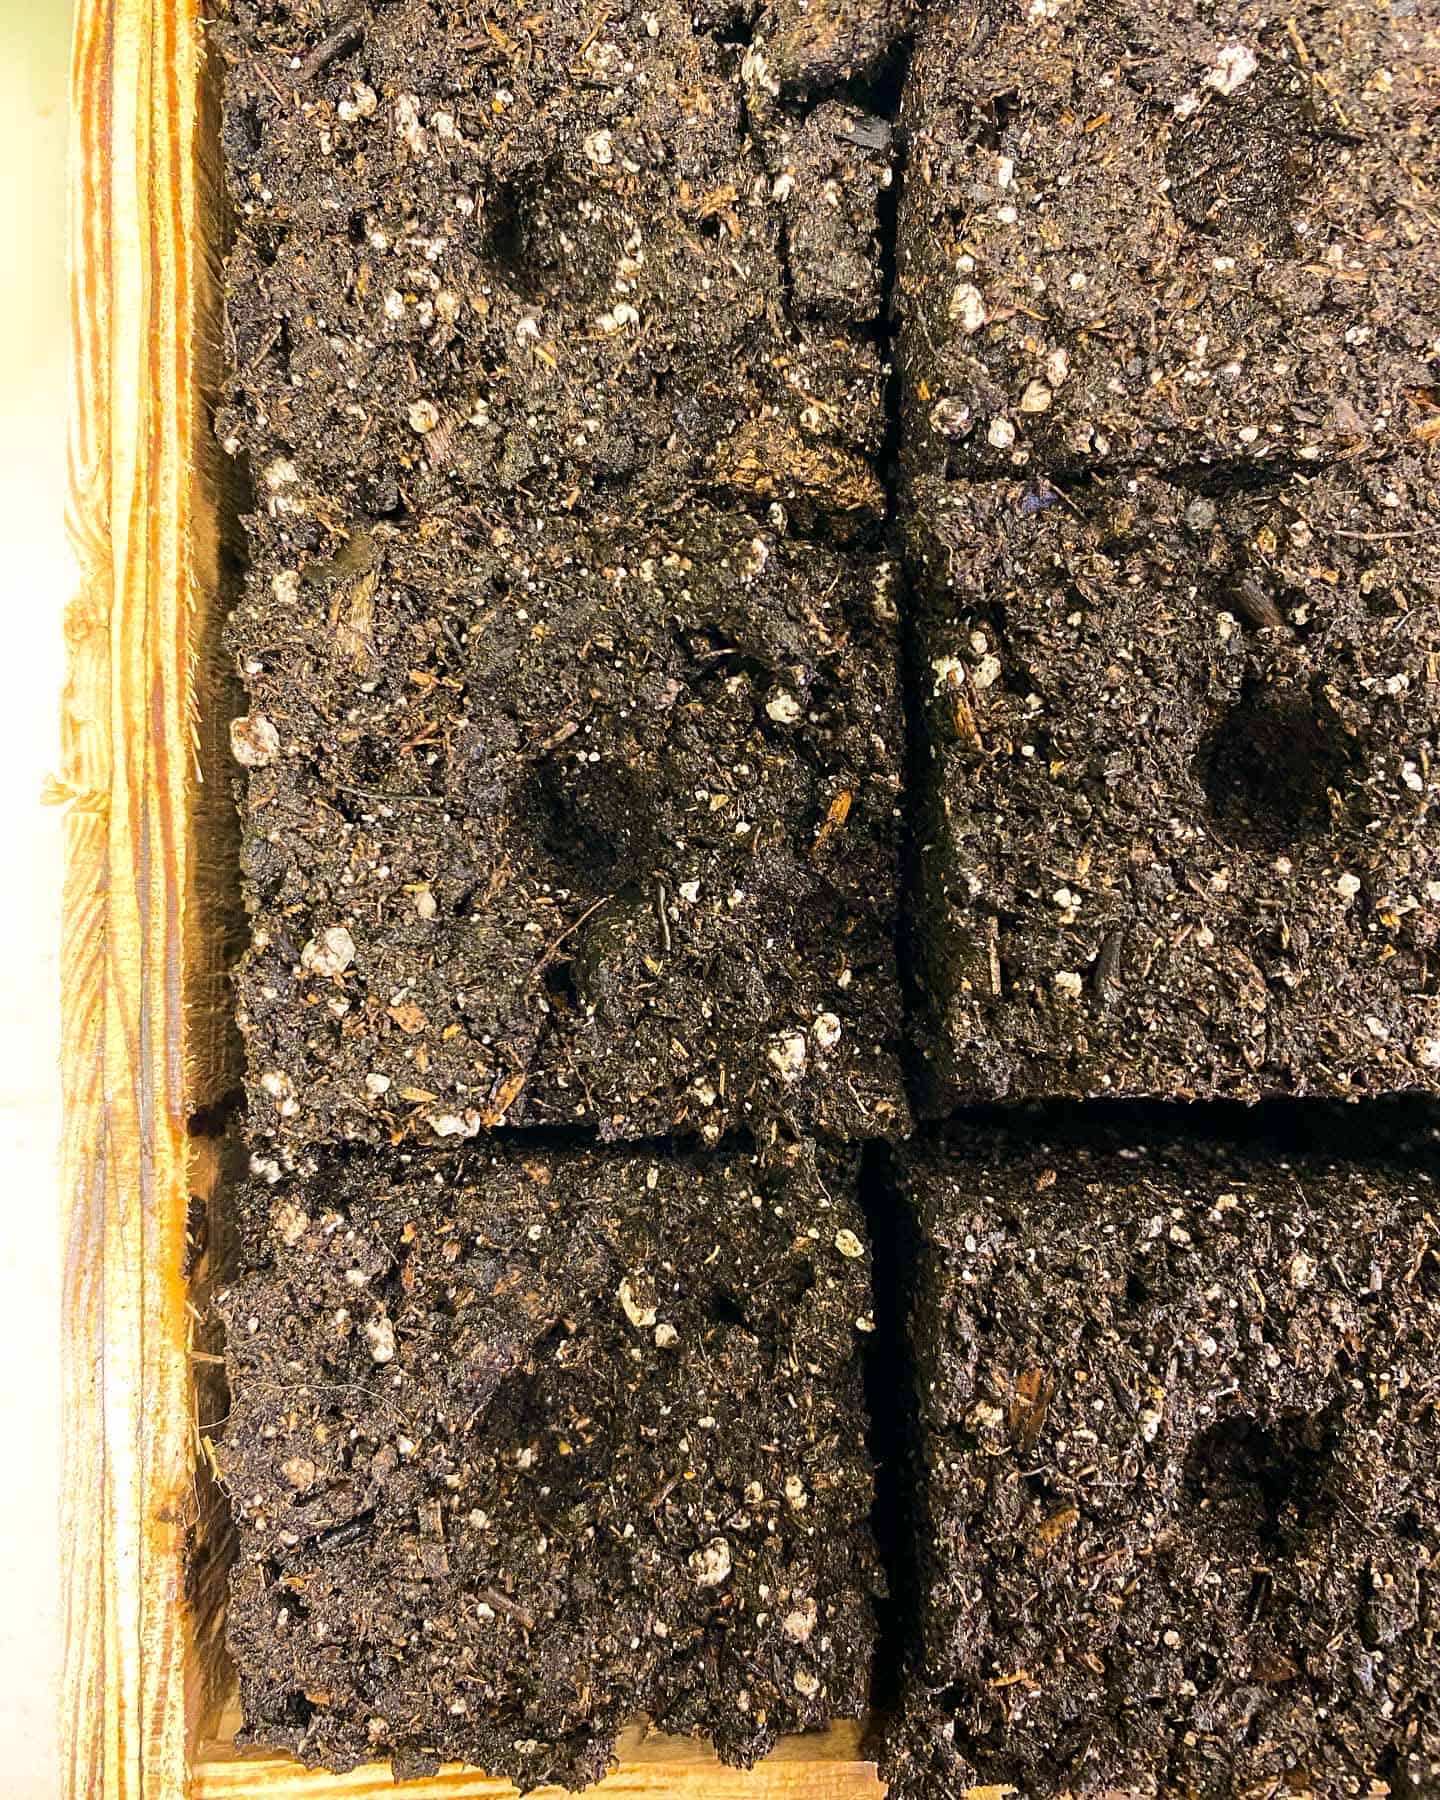 An overhead view of soil blocks sitting in a wooden soil block tray.